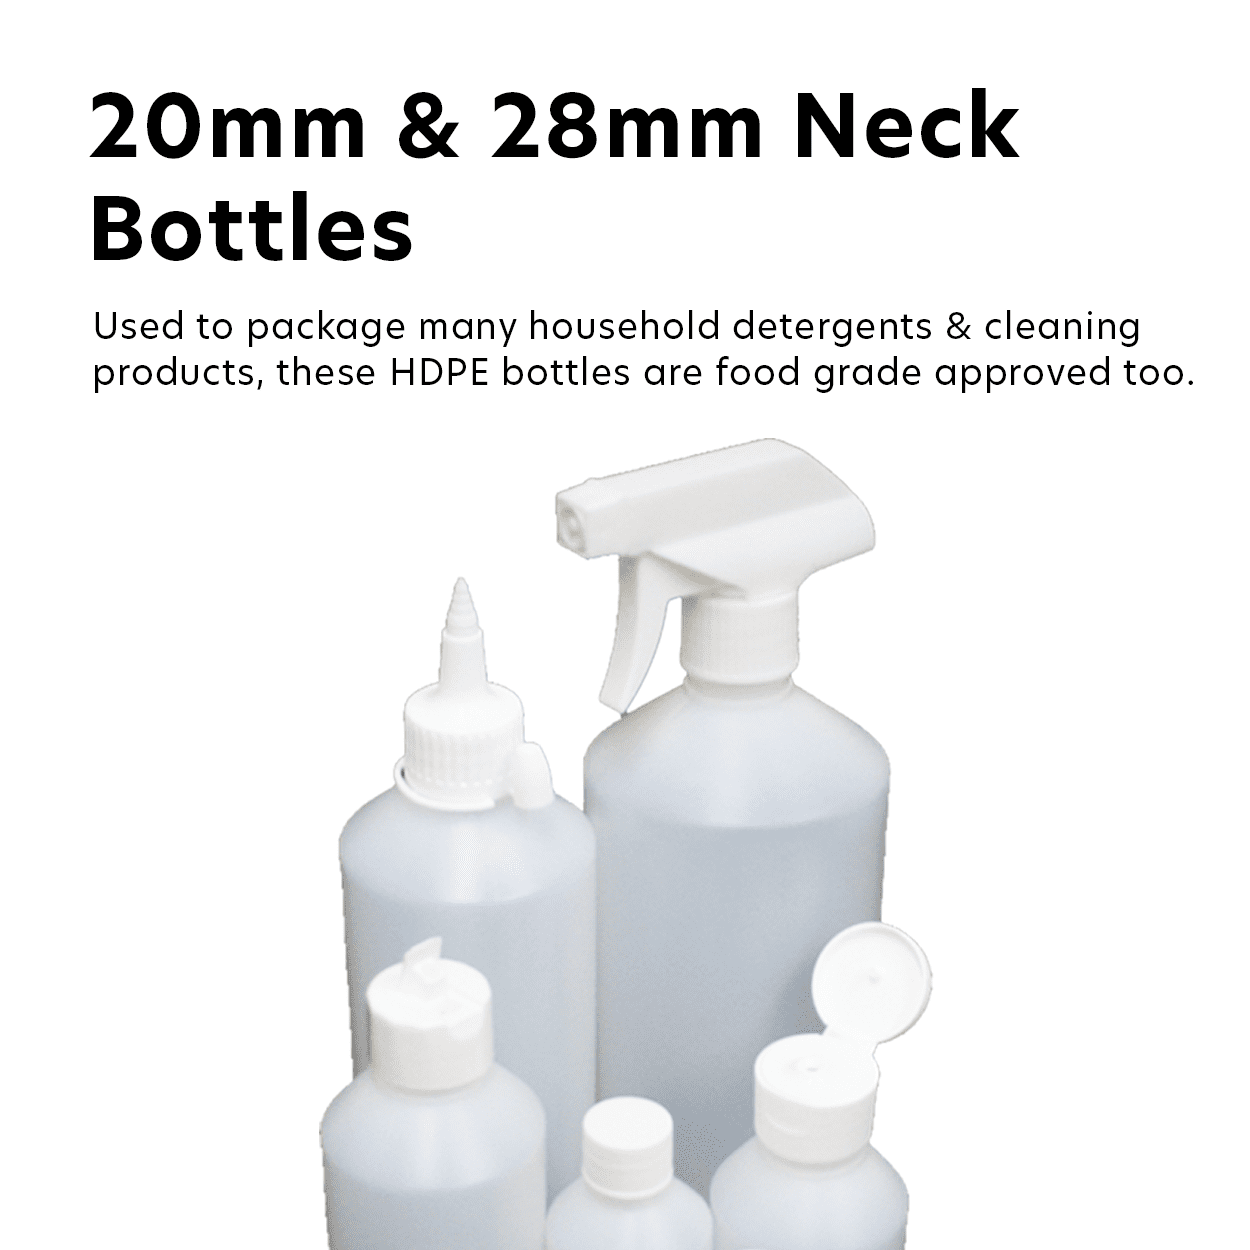 20mm & 28mm Neck Bottles